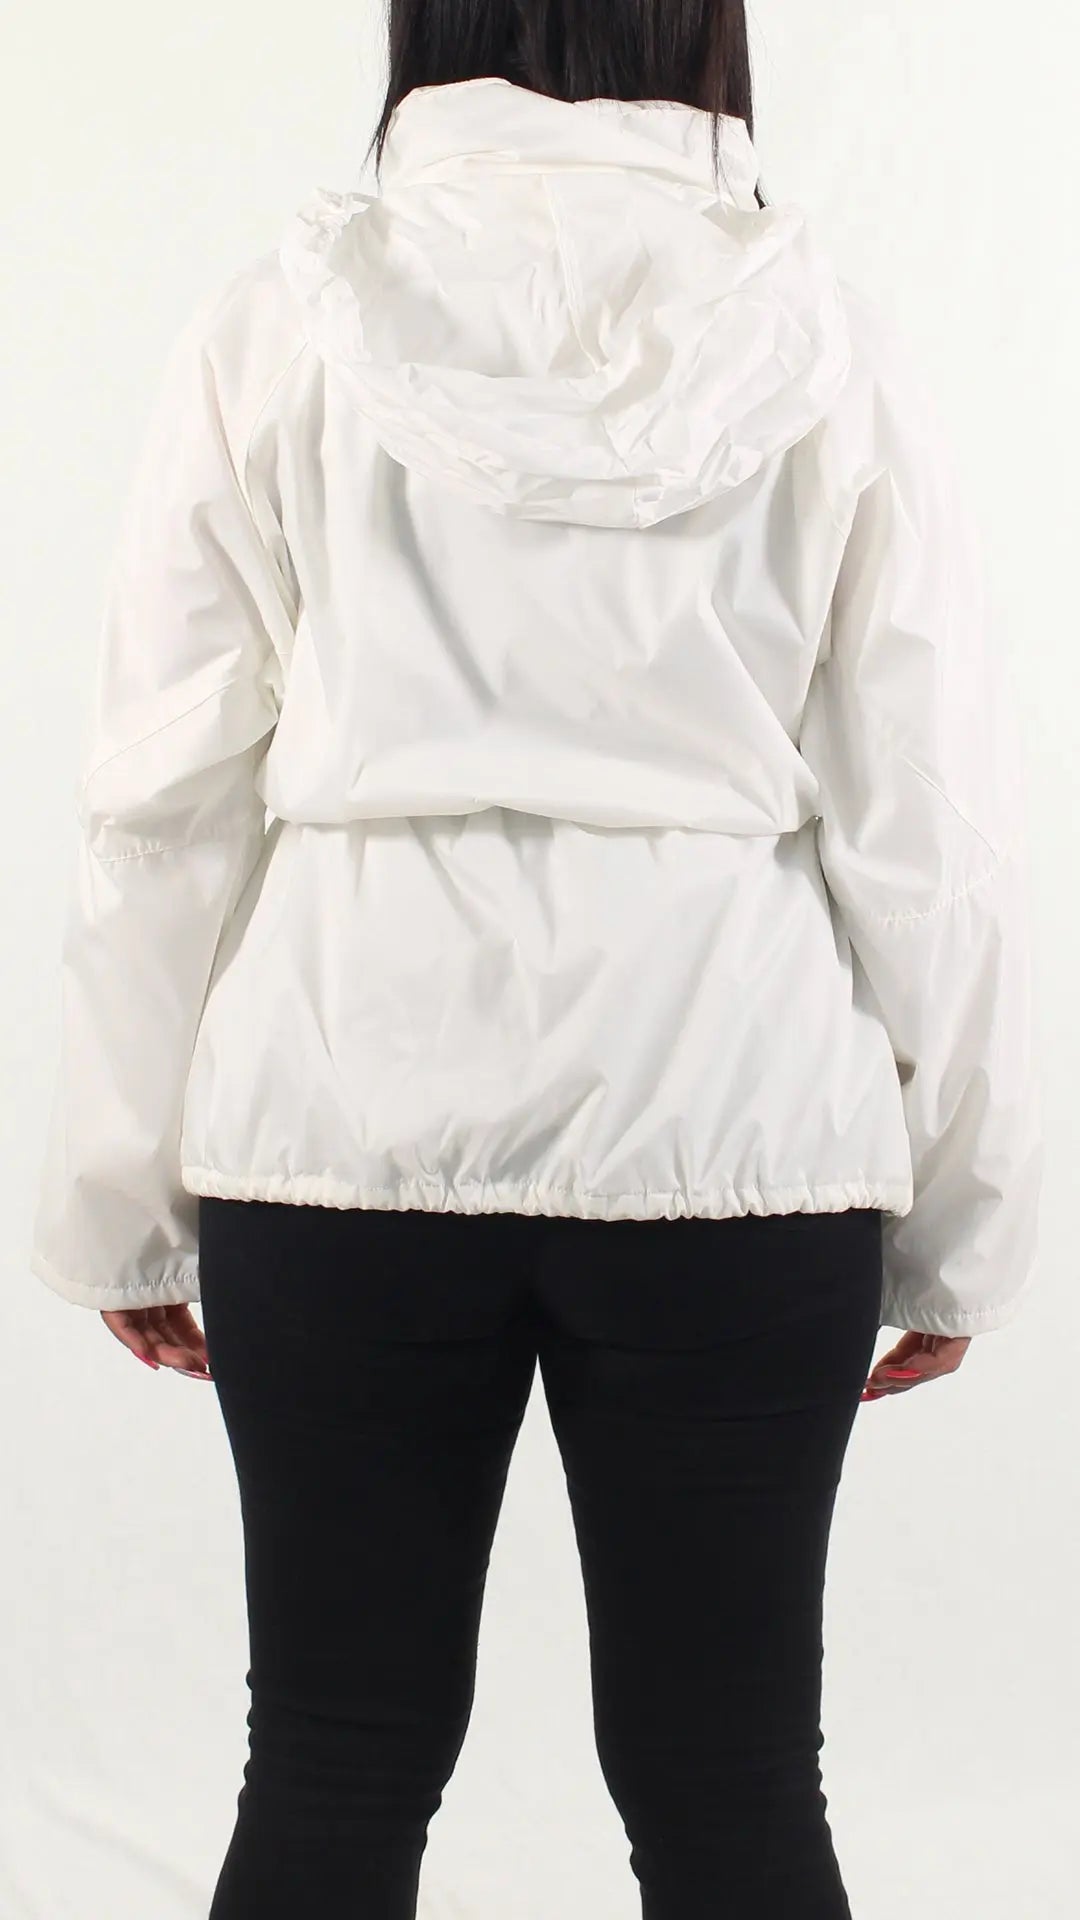 Design Ra Trikora - White Nylon Jacket- ThriftTale.com - Vintage and second handclothing